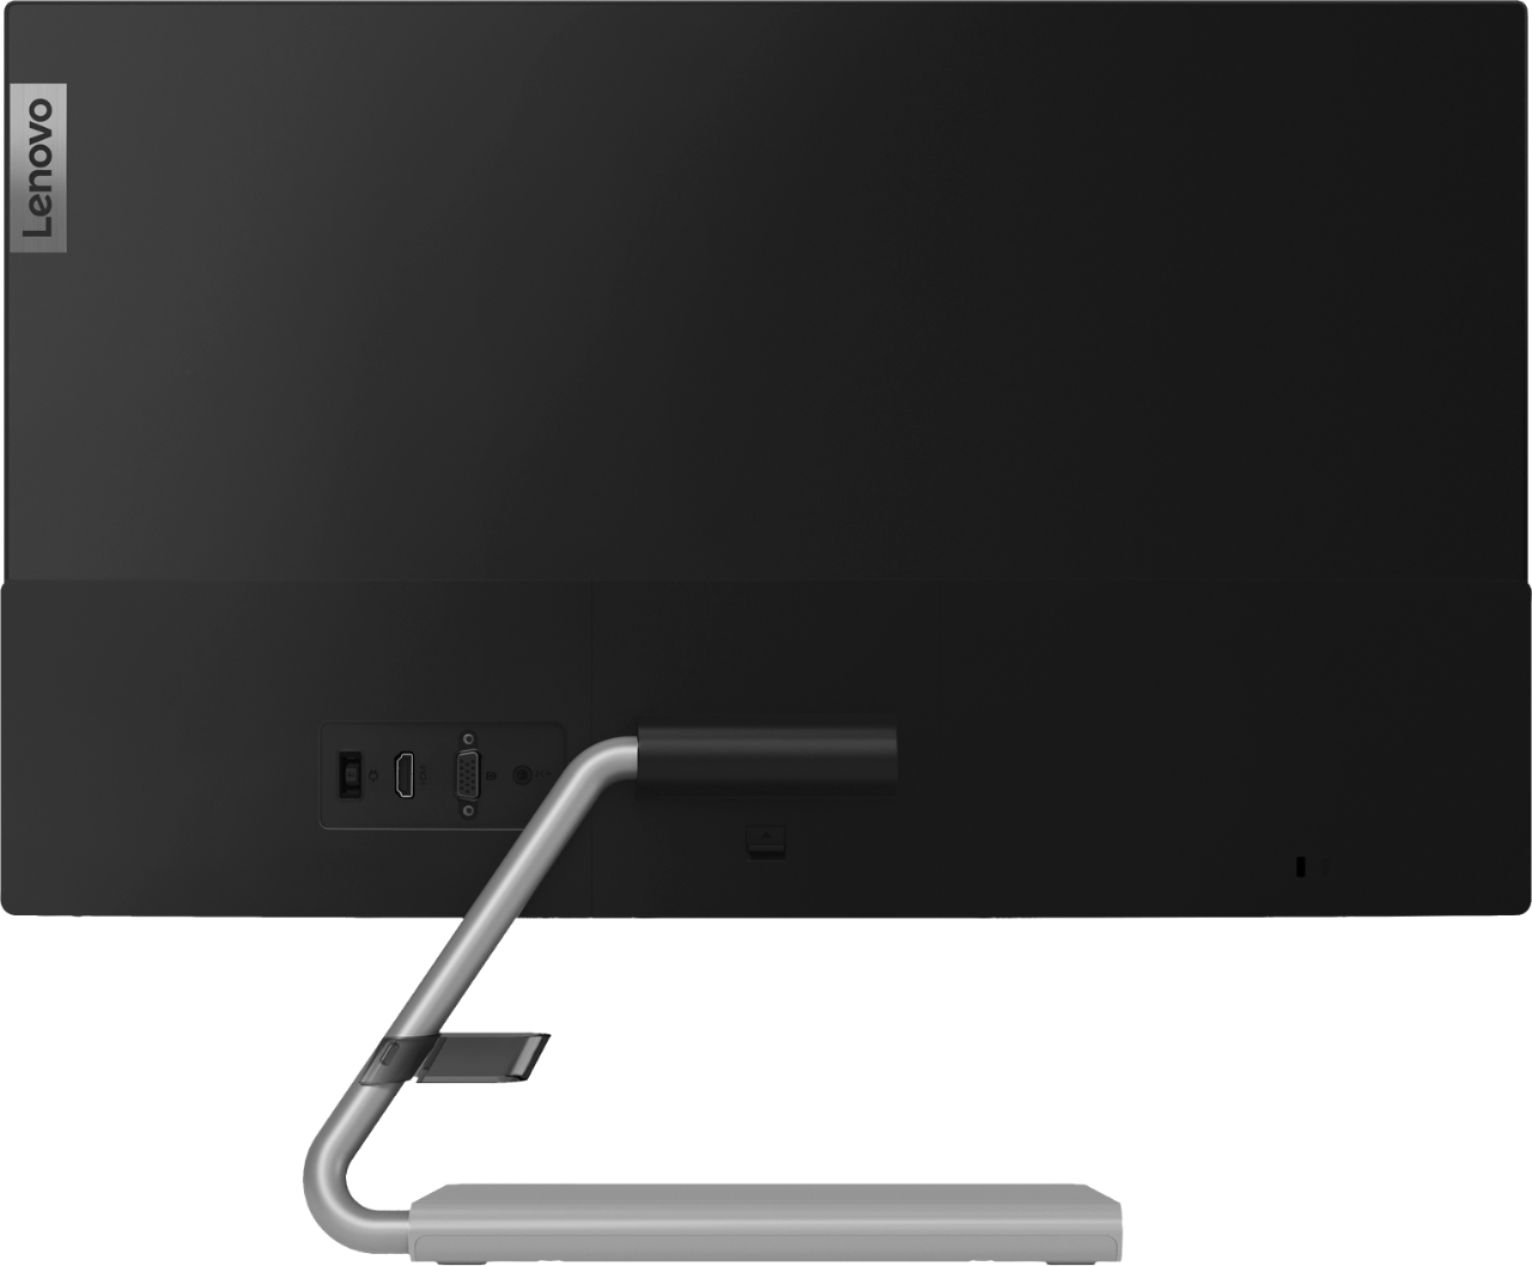 Back View: Lenovo - Q24i-10 24" IPS LED FHD FreeSync Monitor (HDMI, VGA) - Black